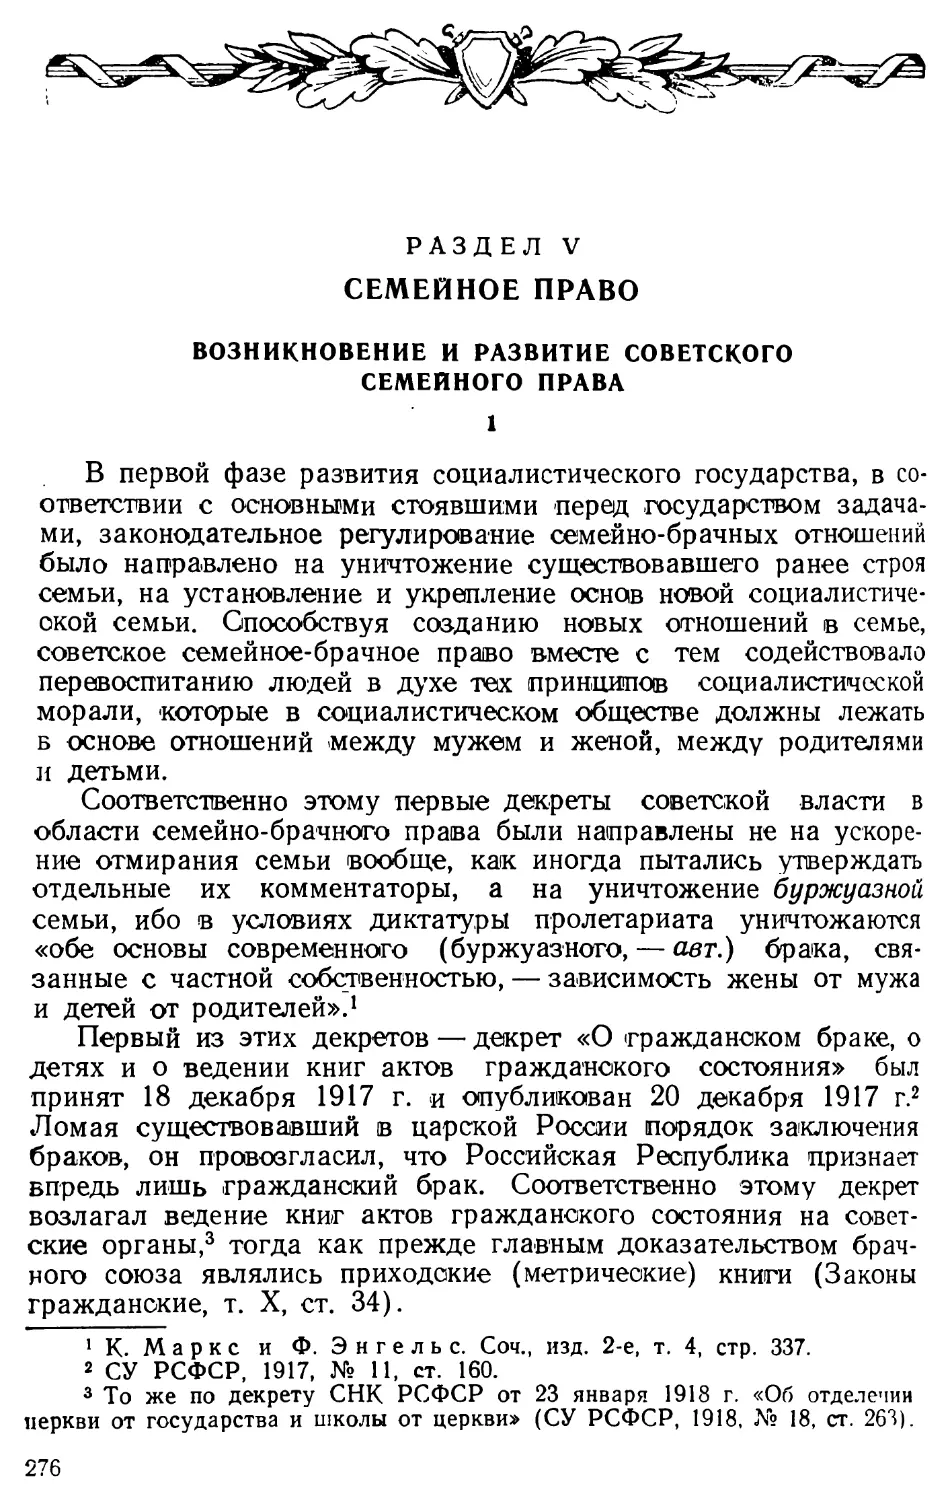 Возникновение и развитие советского семейного права.